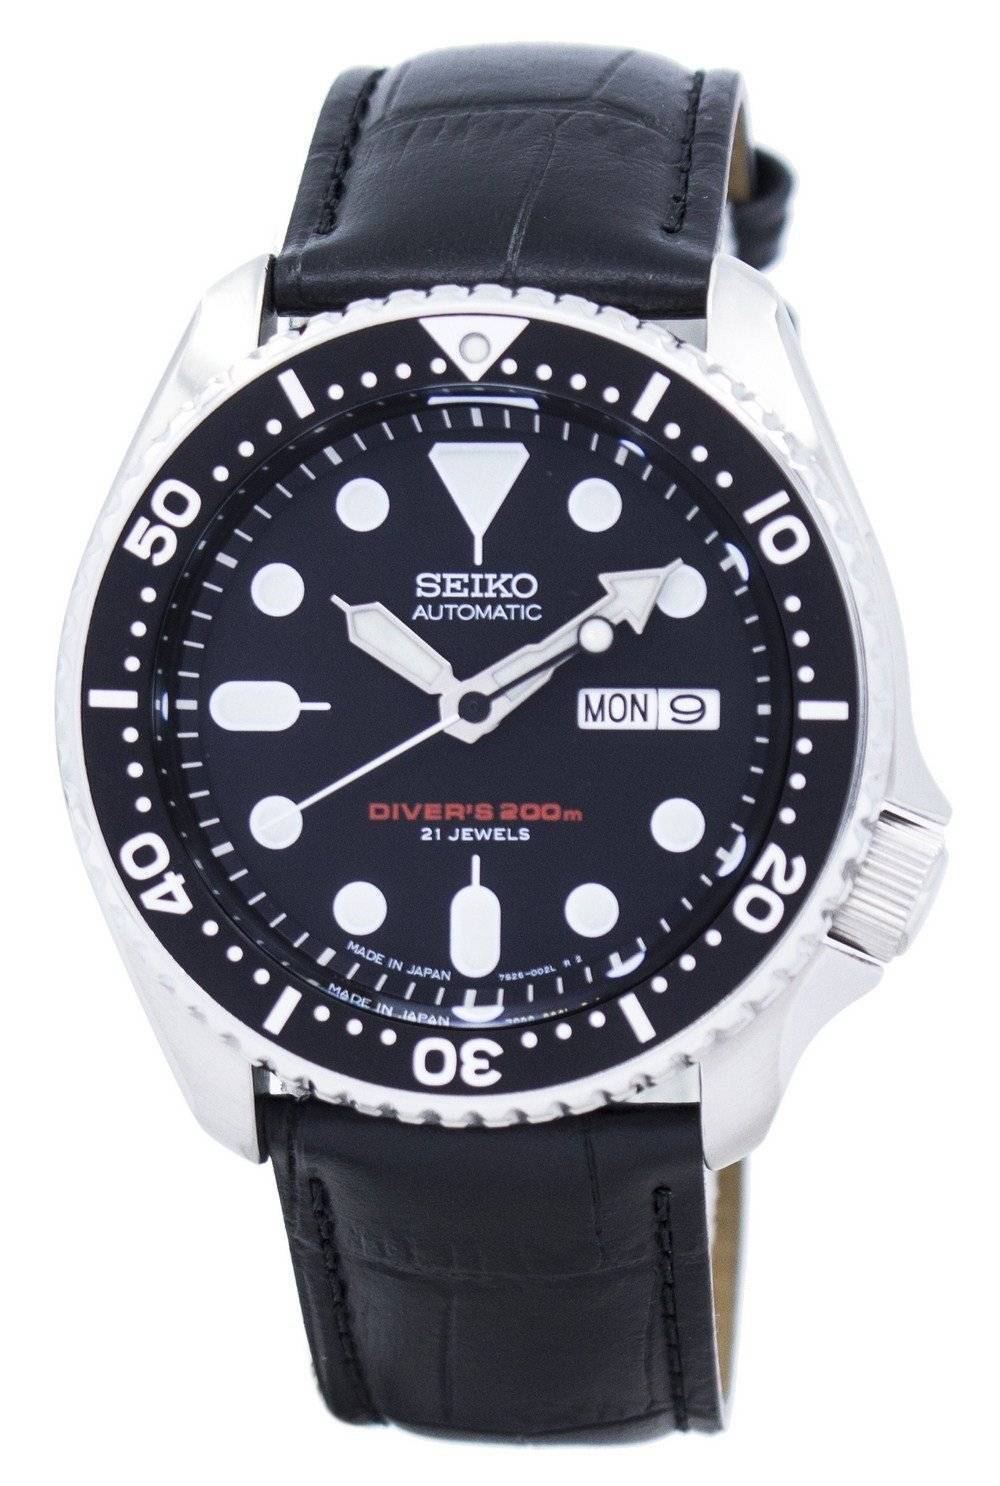 Đồng hồ Seiko Diver - Đồng hồ Seiko Automatic Diver's, Sports, Chronograph